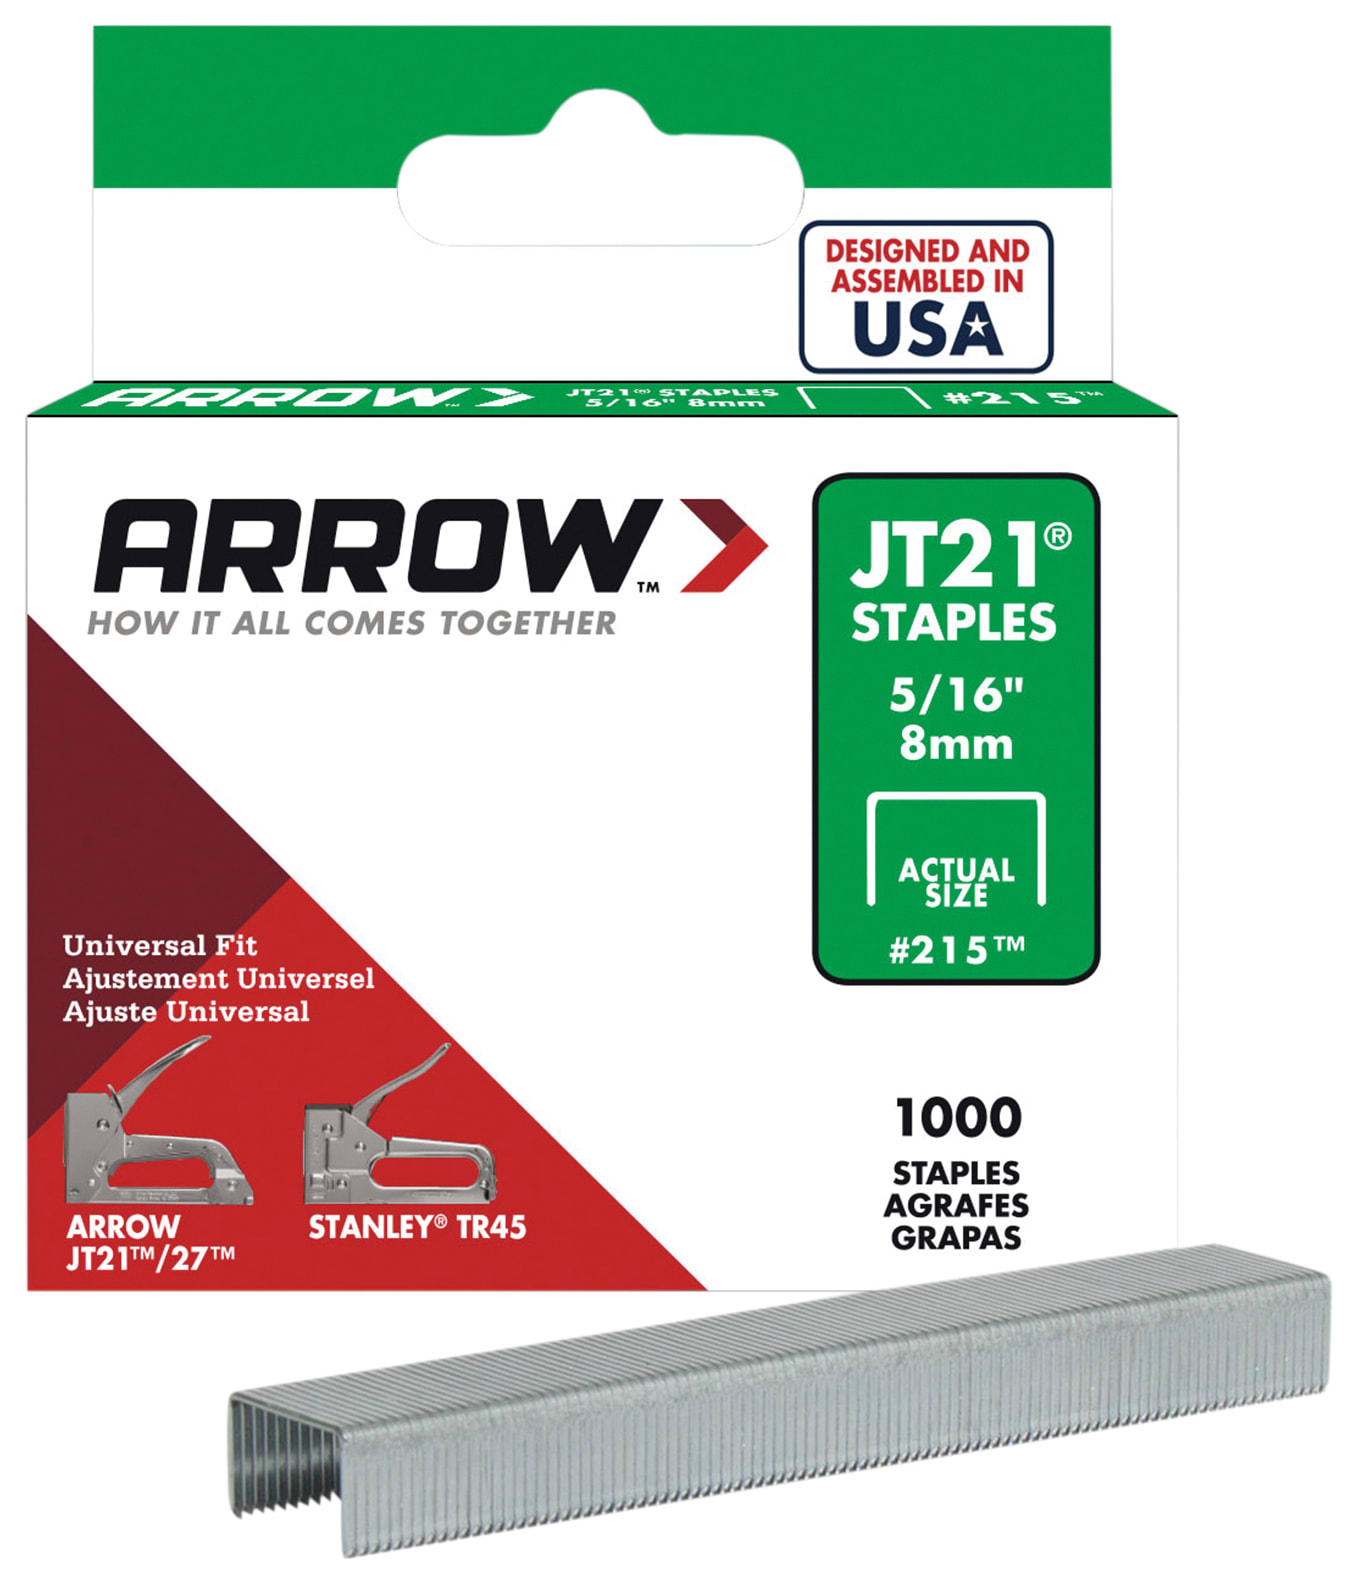 Arrow JT21 T27 Light Duty Staples - 8mm